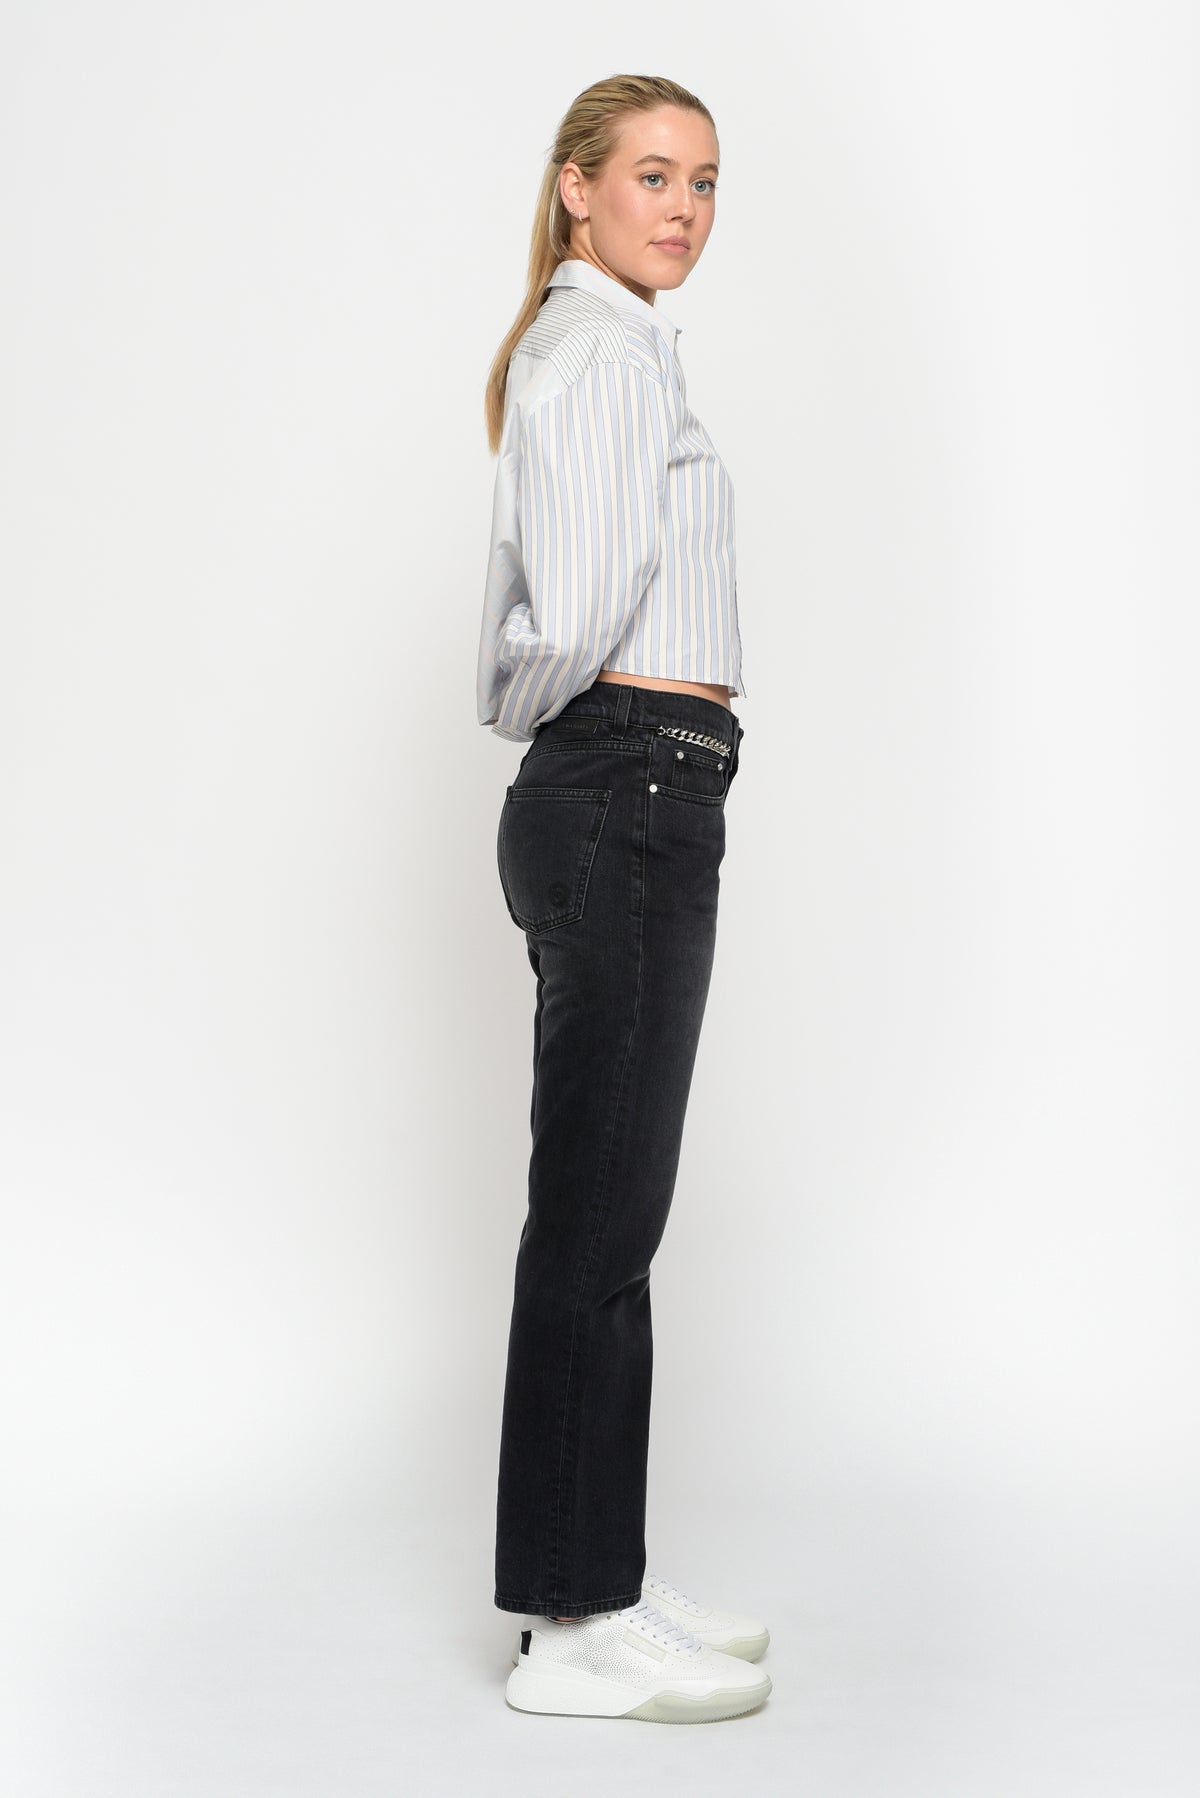 Stella McCartney Denim Jeans